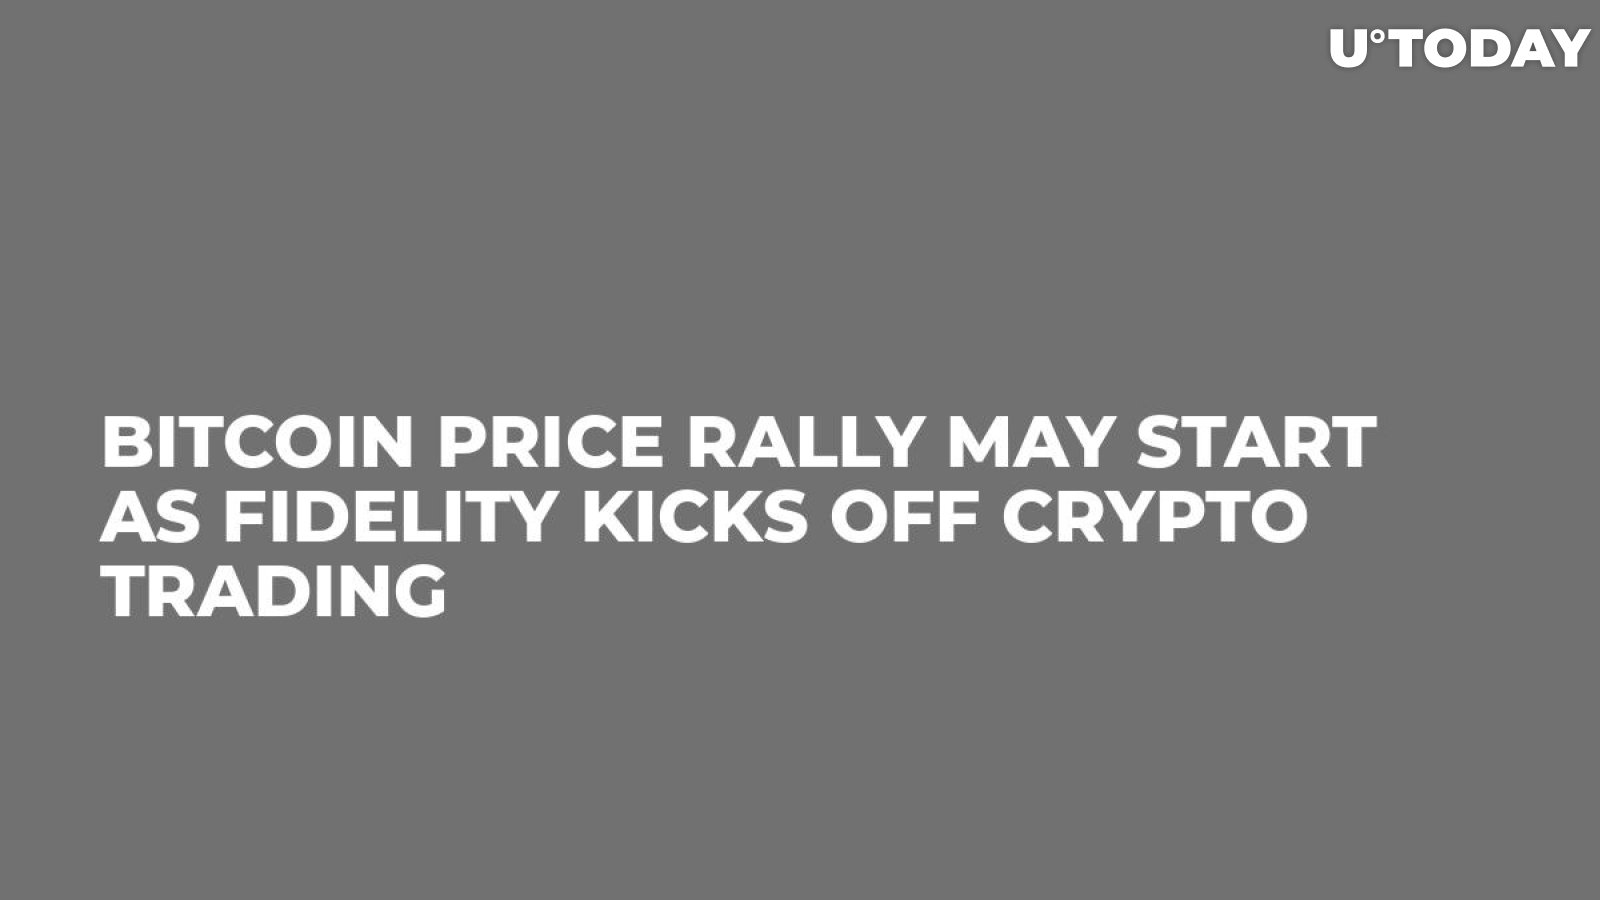 Bitcoin Price Rally May Start as Fidelity Kicks Off Crypto Trading